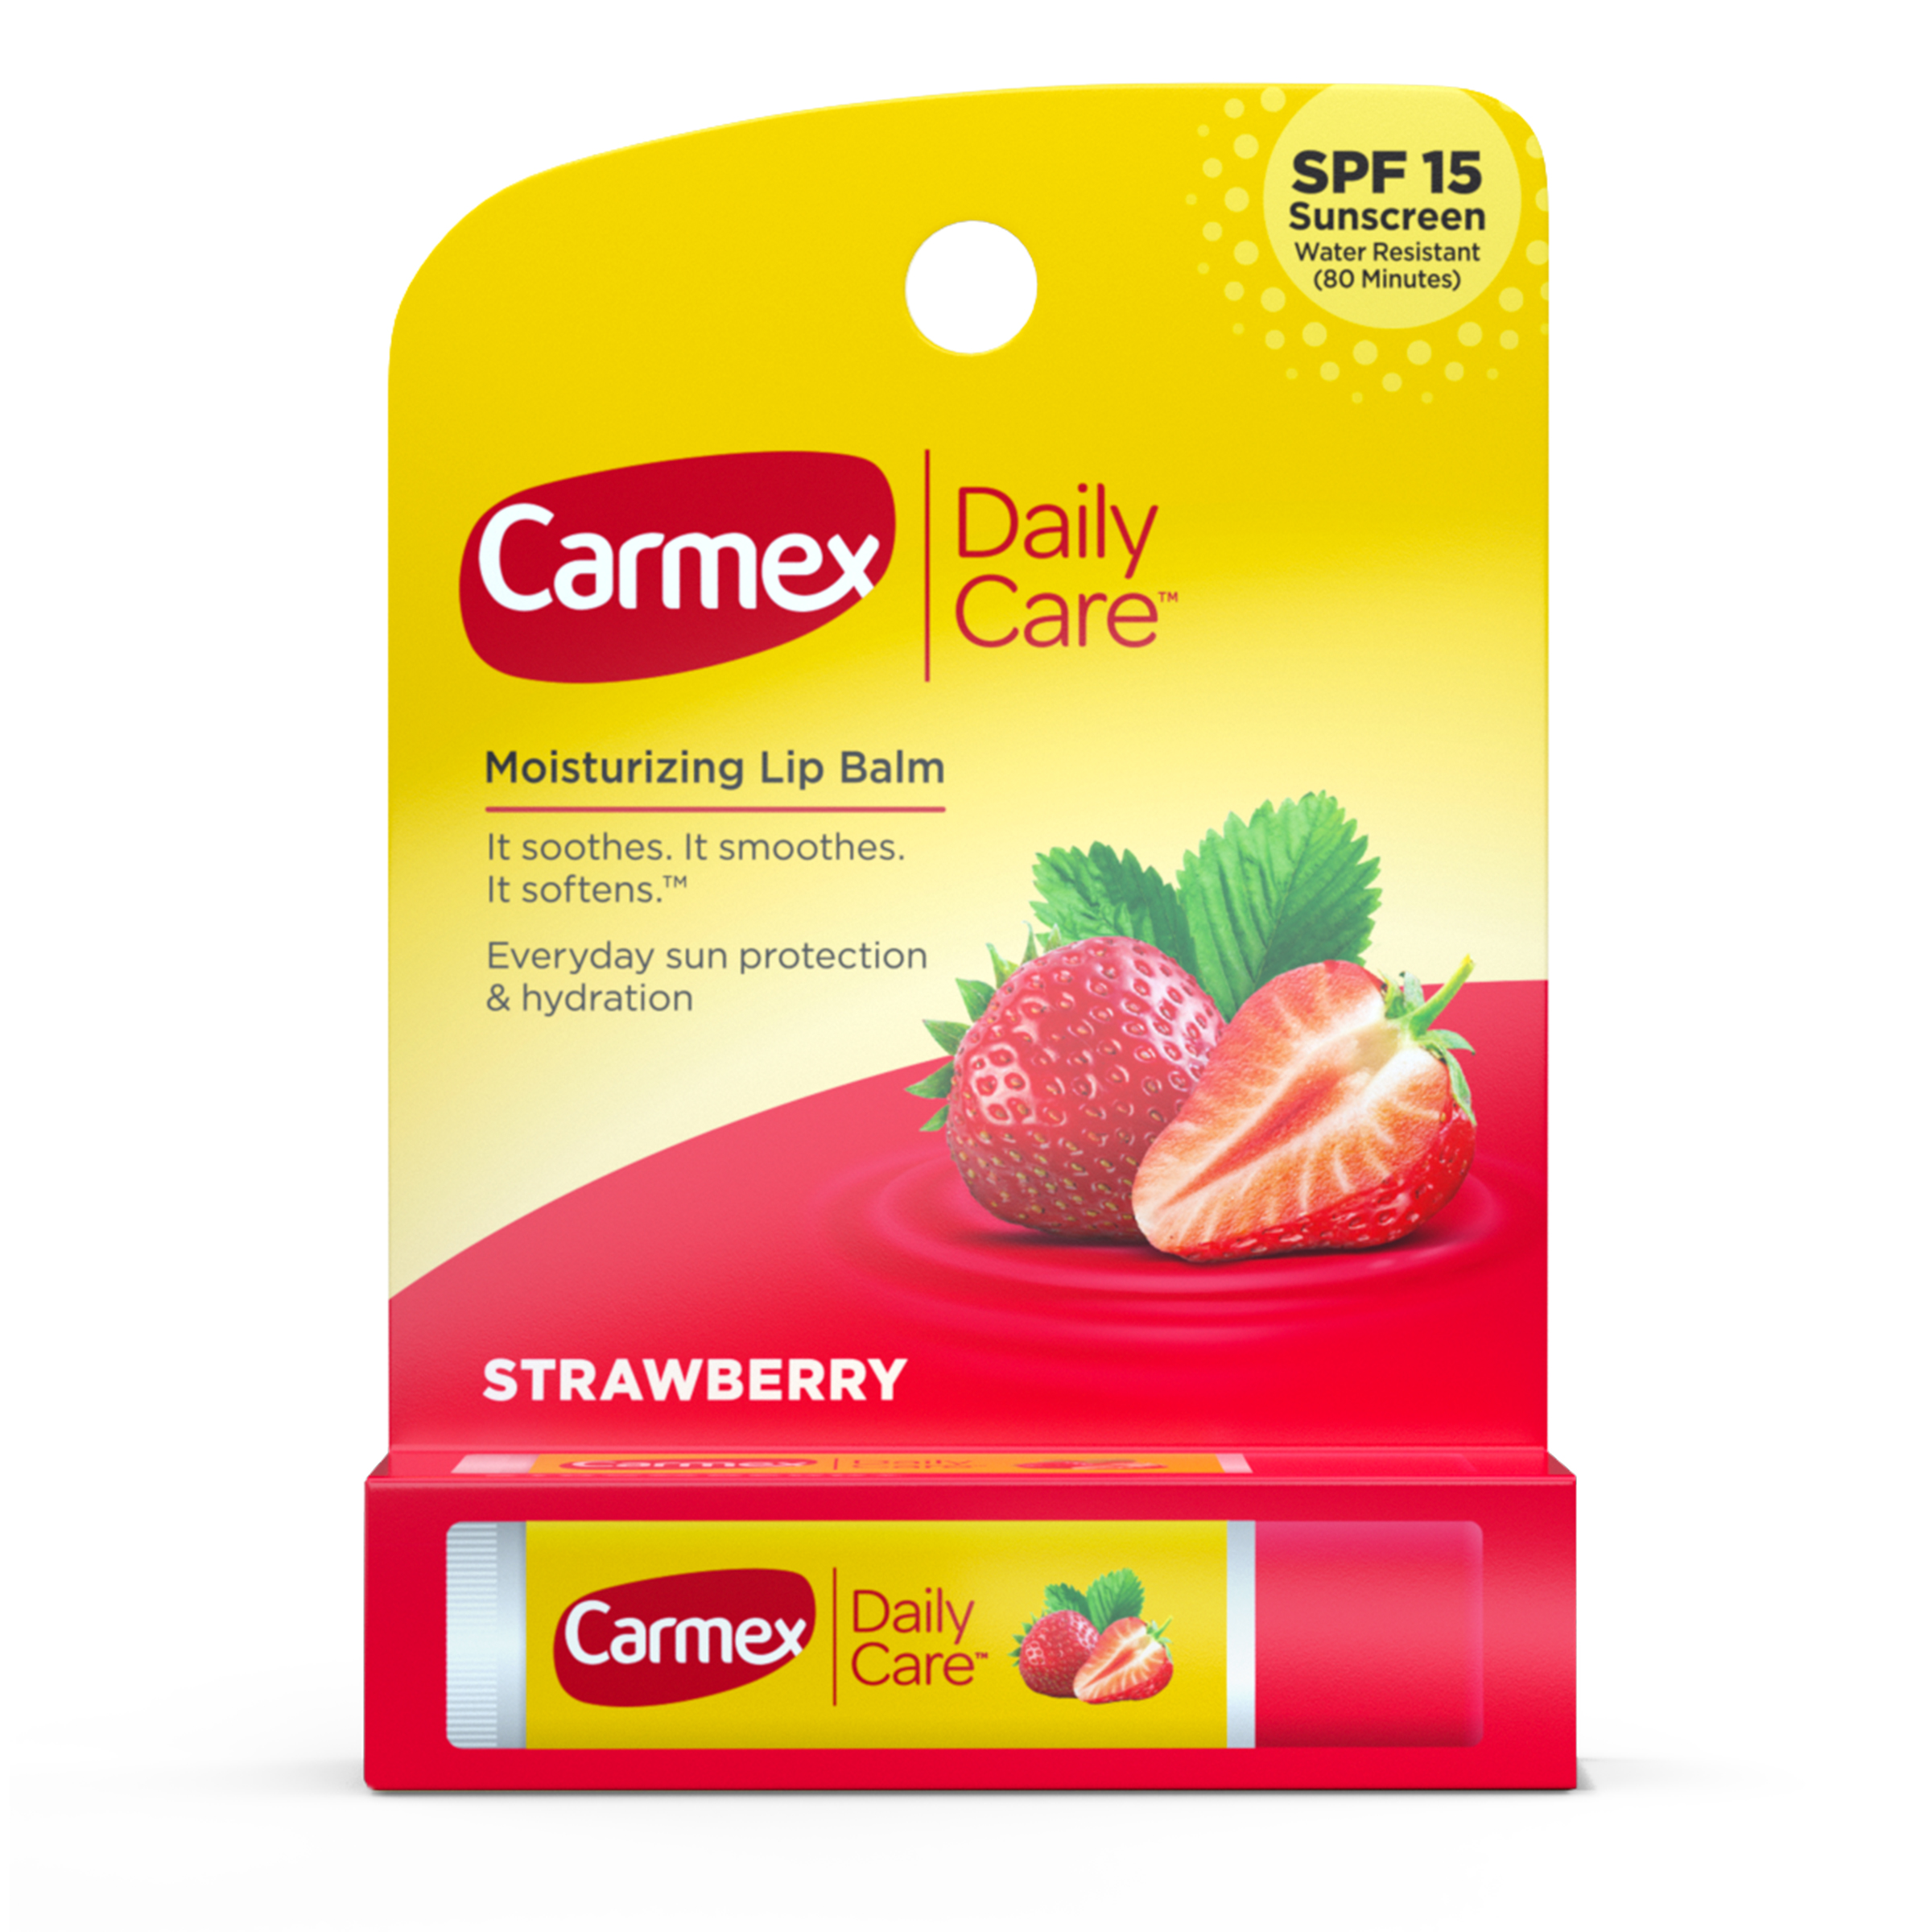 Carmex Daily Care Moisturizing Lip Balm Stick, SPF 15, Strawberry Lip Balm Flavor, 1 Count - image 9 of 9